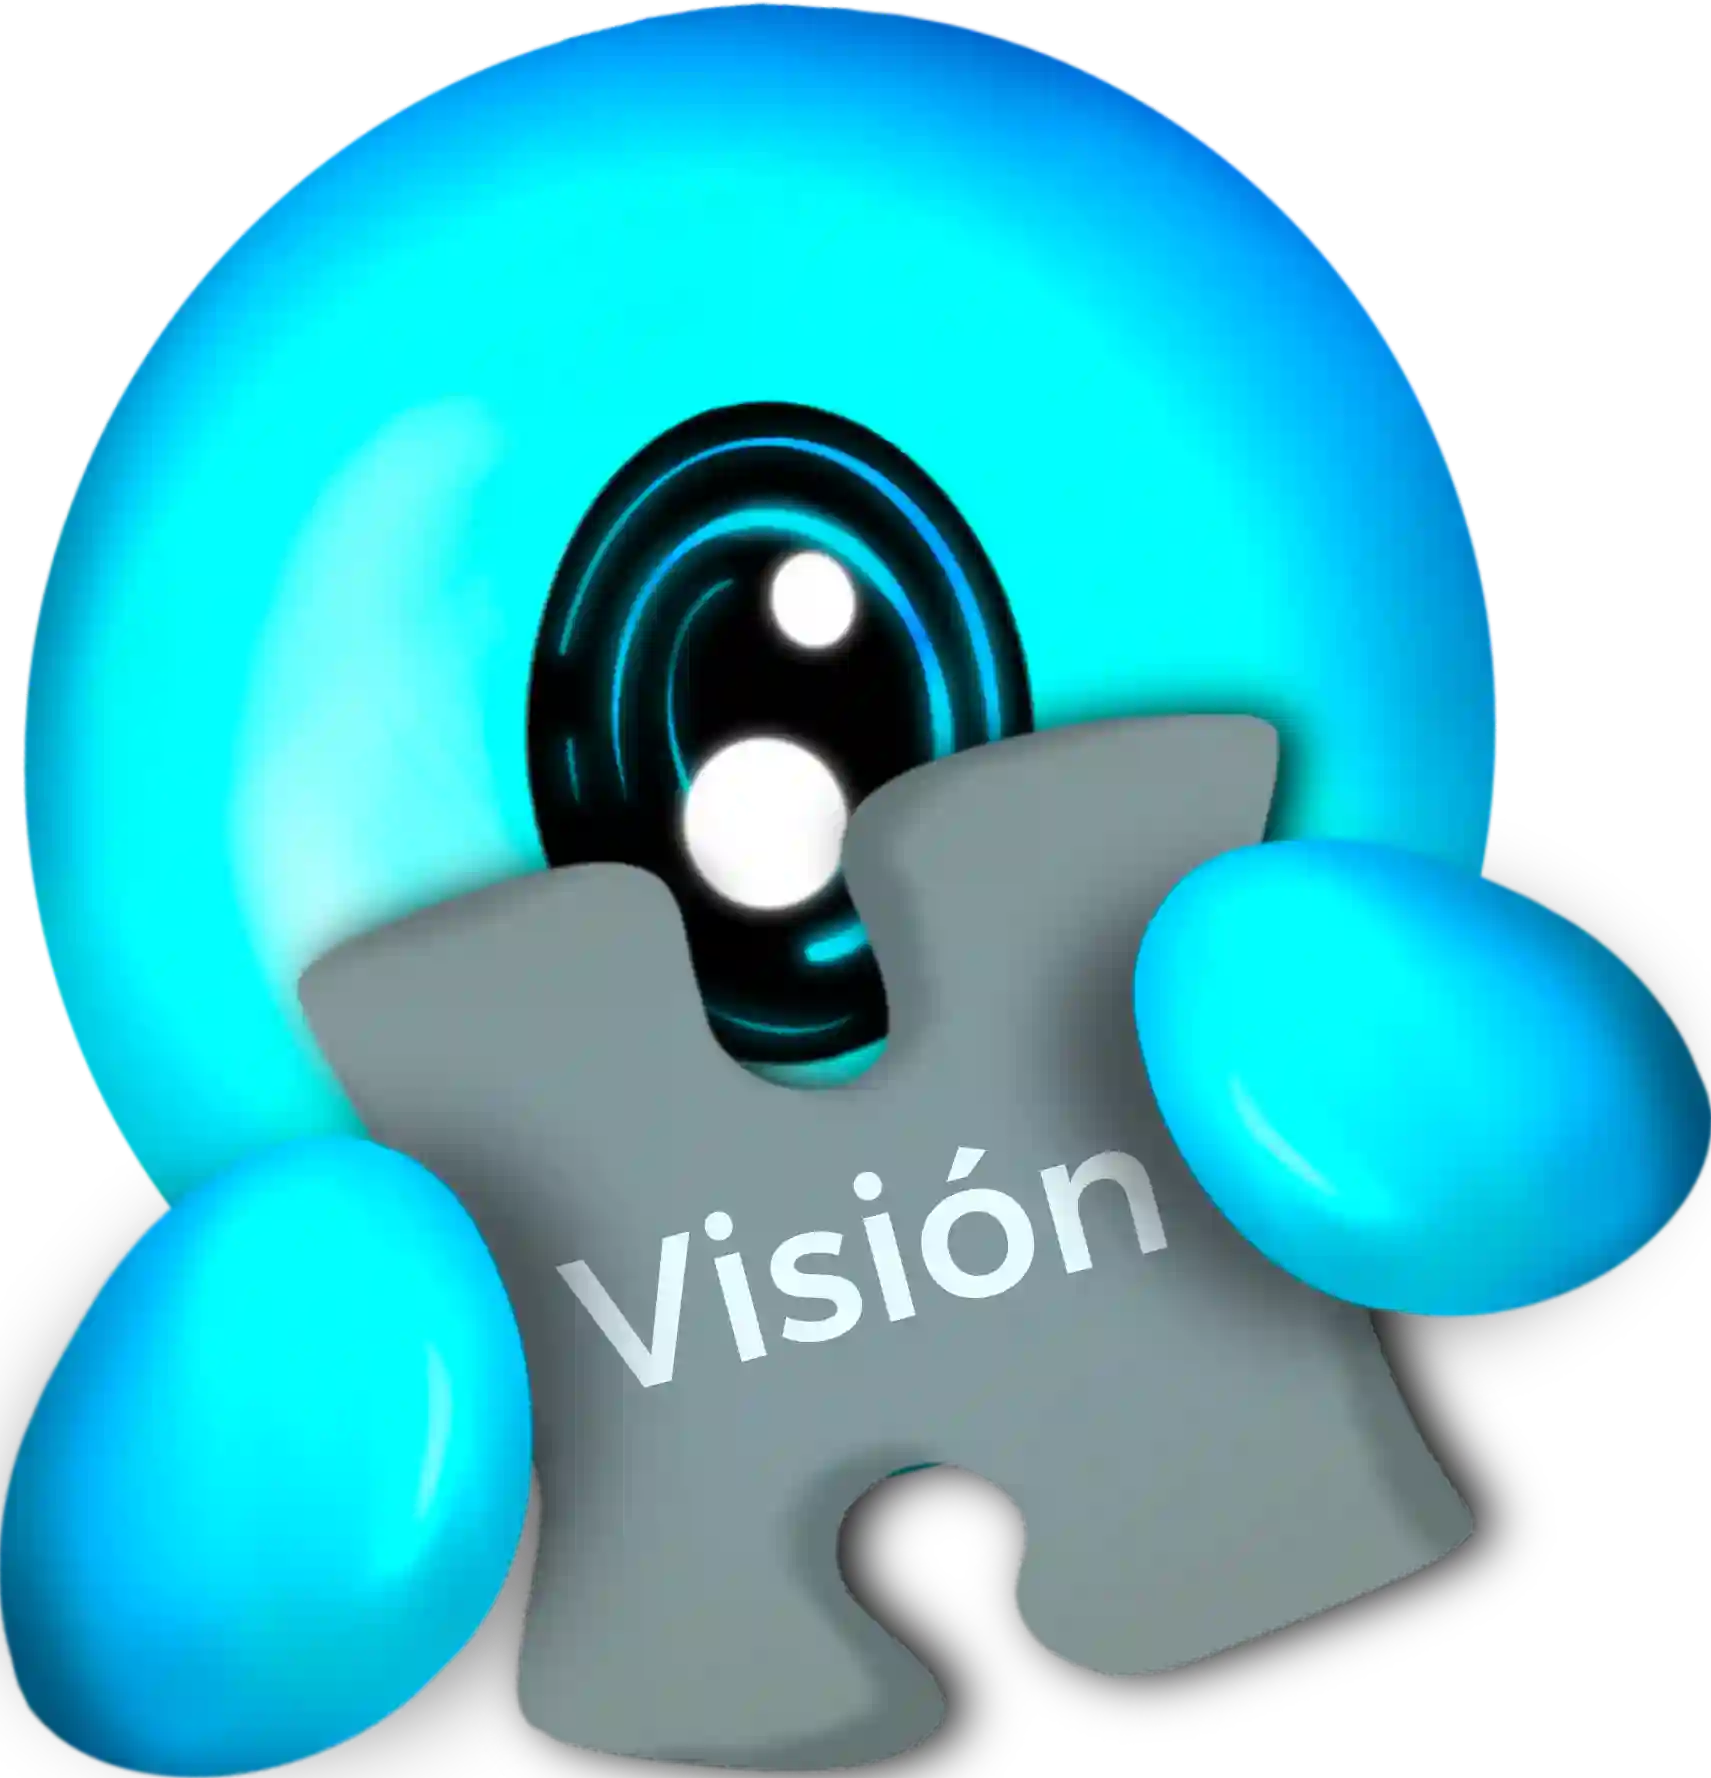 Vision Image